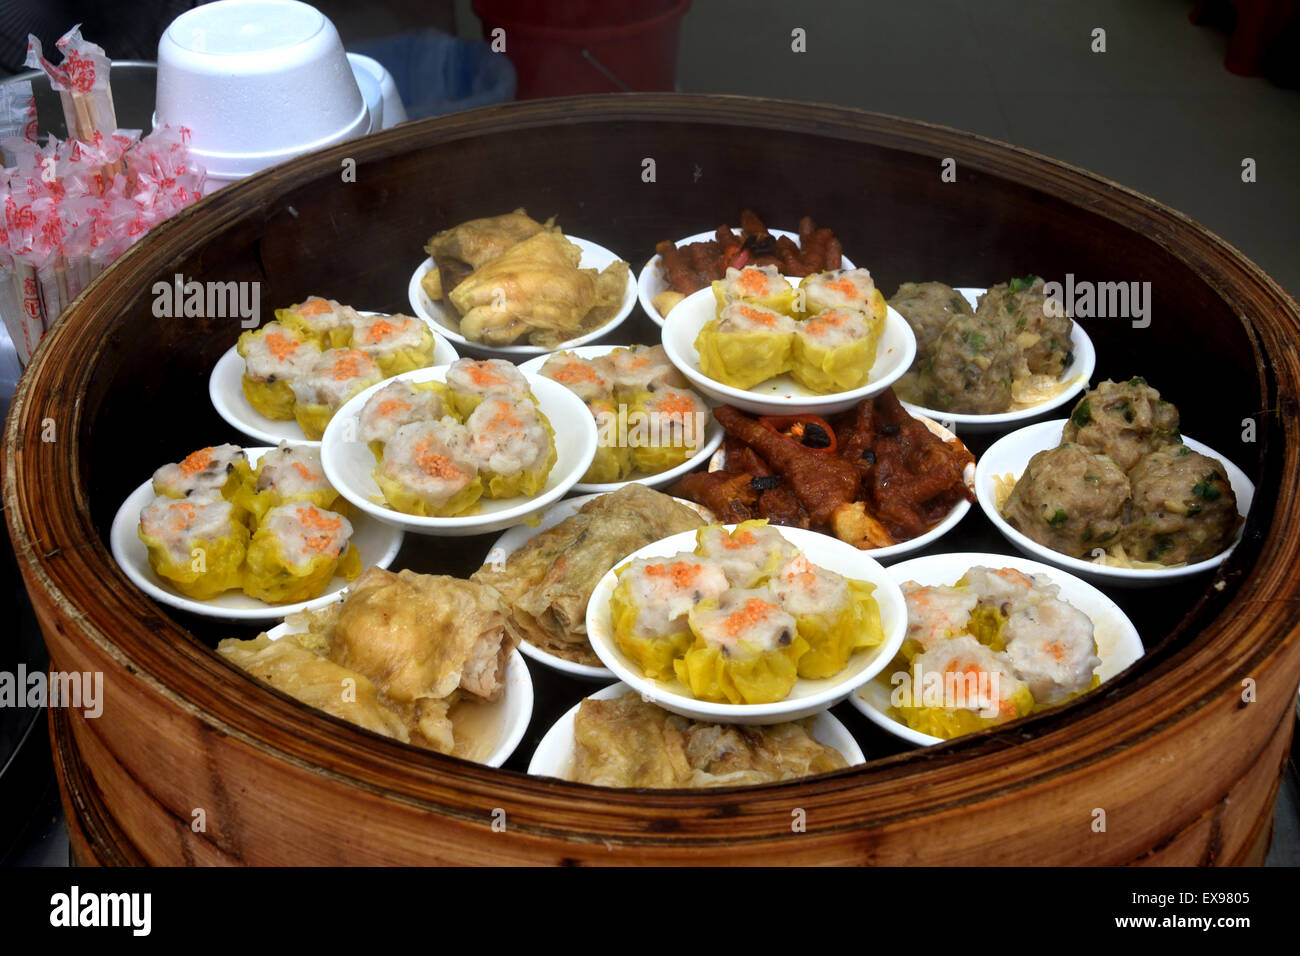 Vaporizador de vapor Dim Sum chinos de Hong Kong ir de restaurante china comida rápida Foto de stock